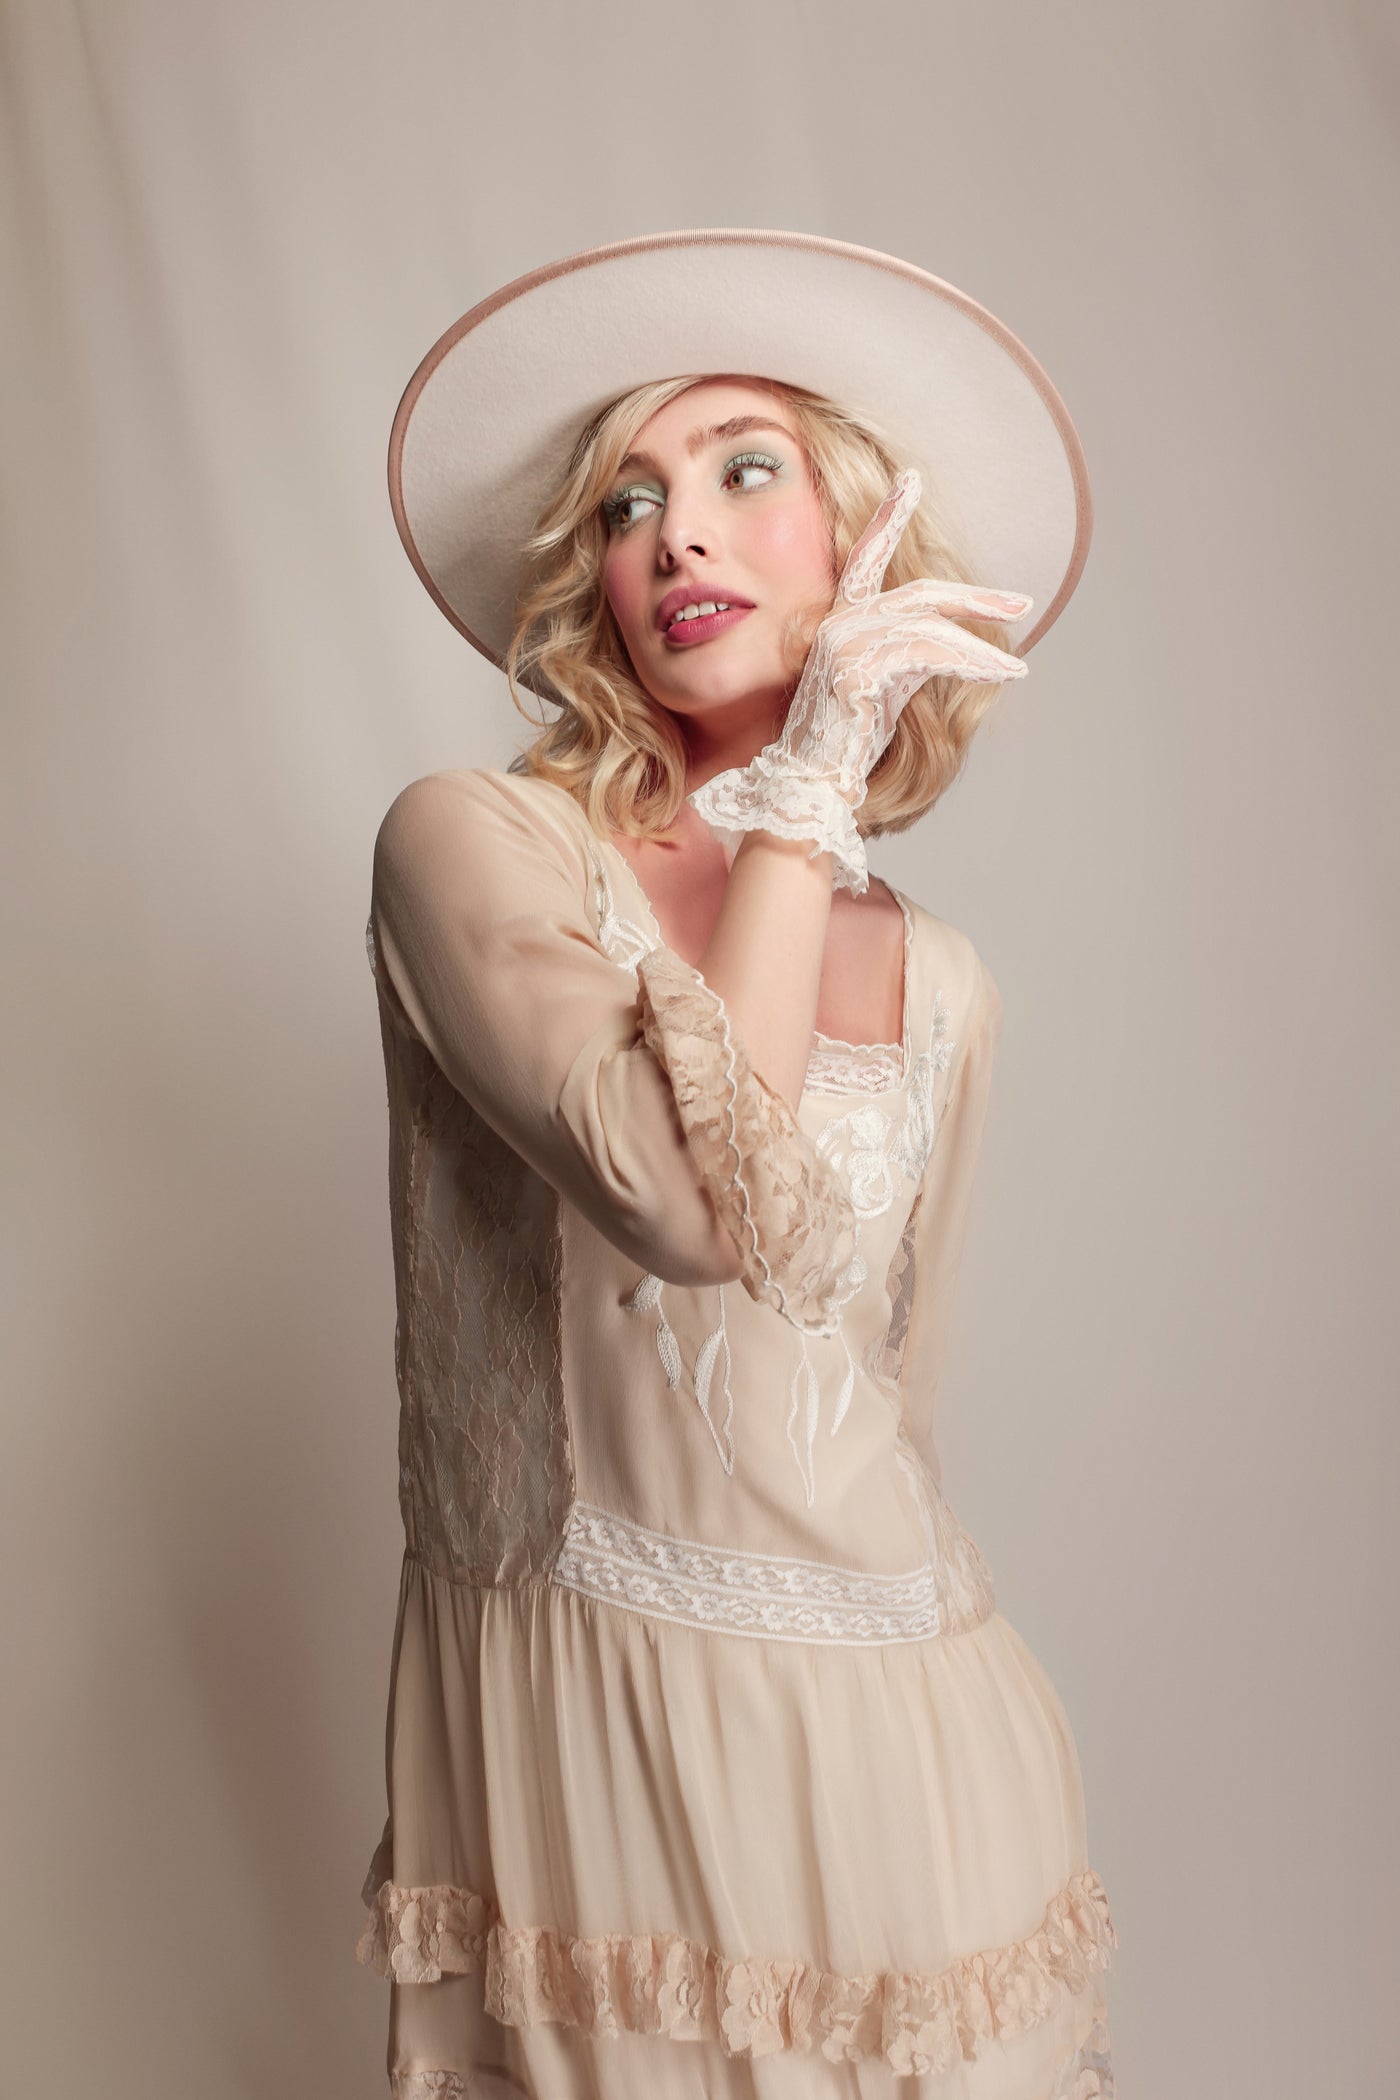 Blossom Creek Ethereal Dress in Ivory-Cream by Nataya